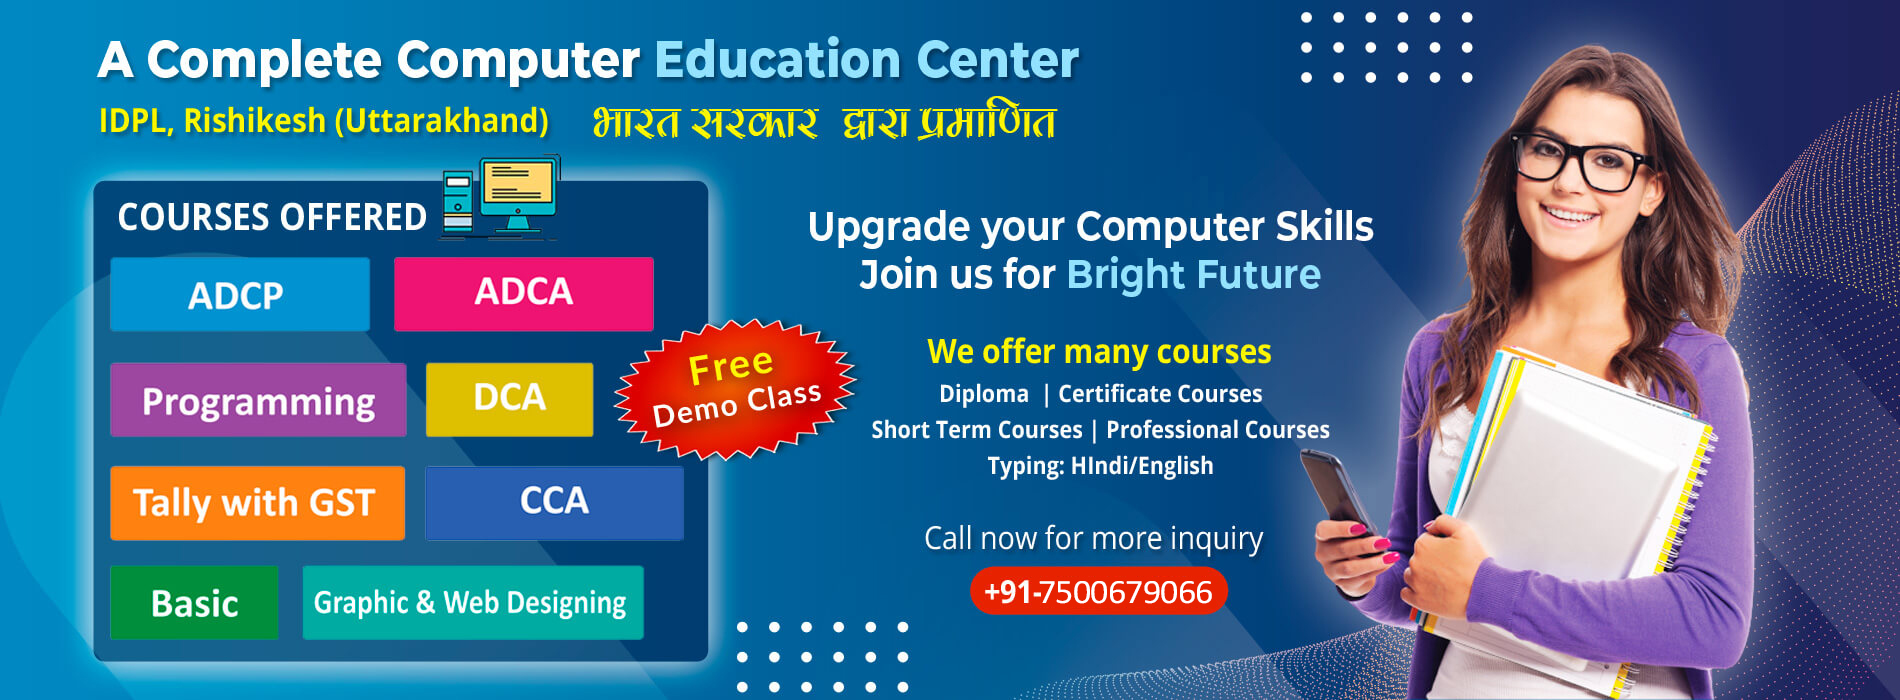 Computer-Guru-Training-Institute-banner-1